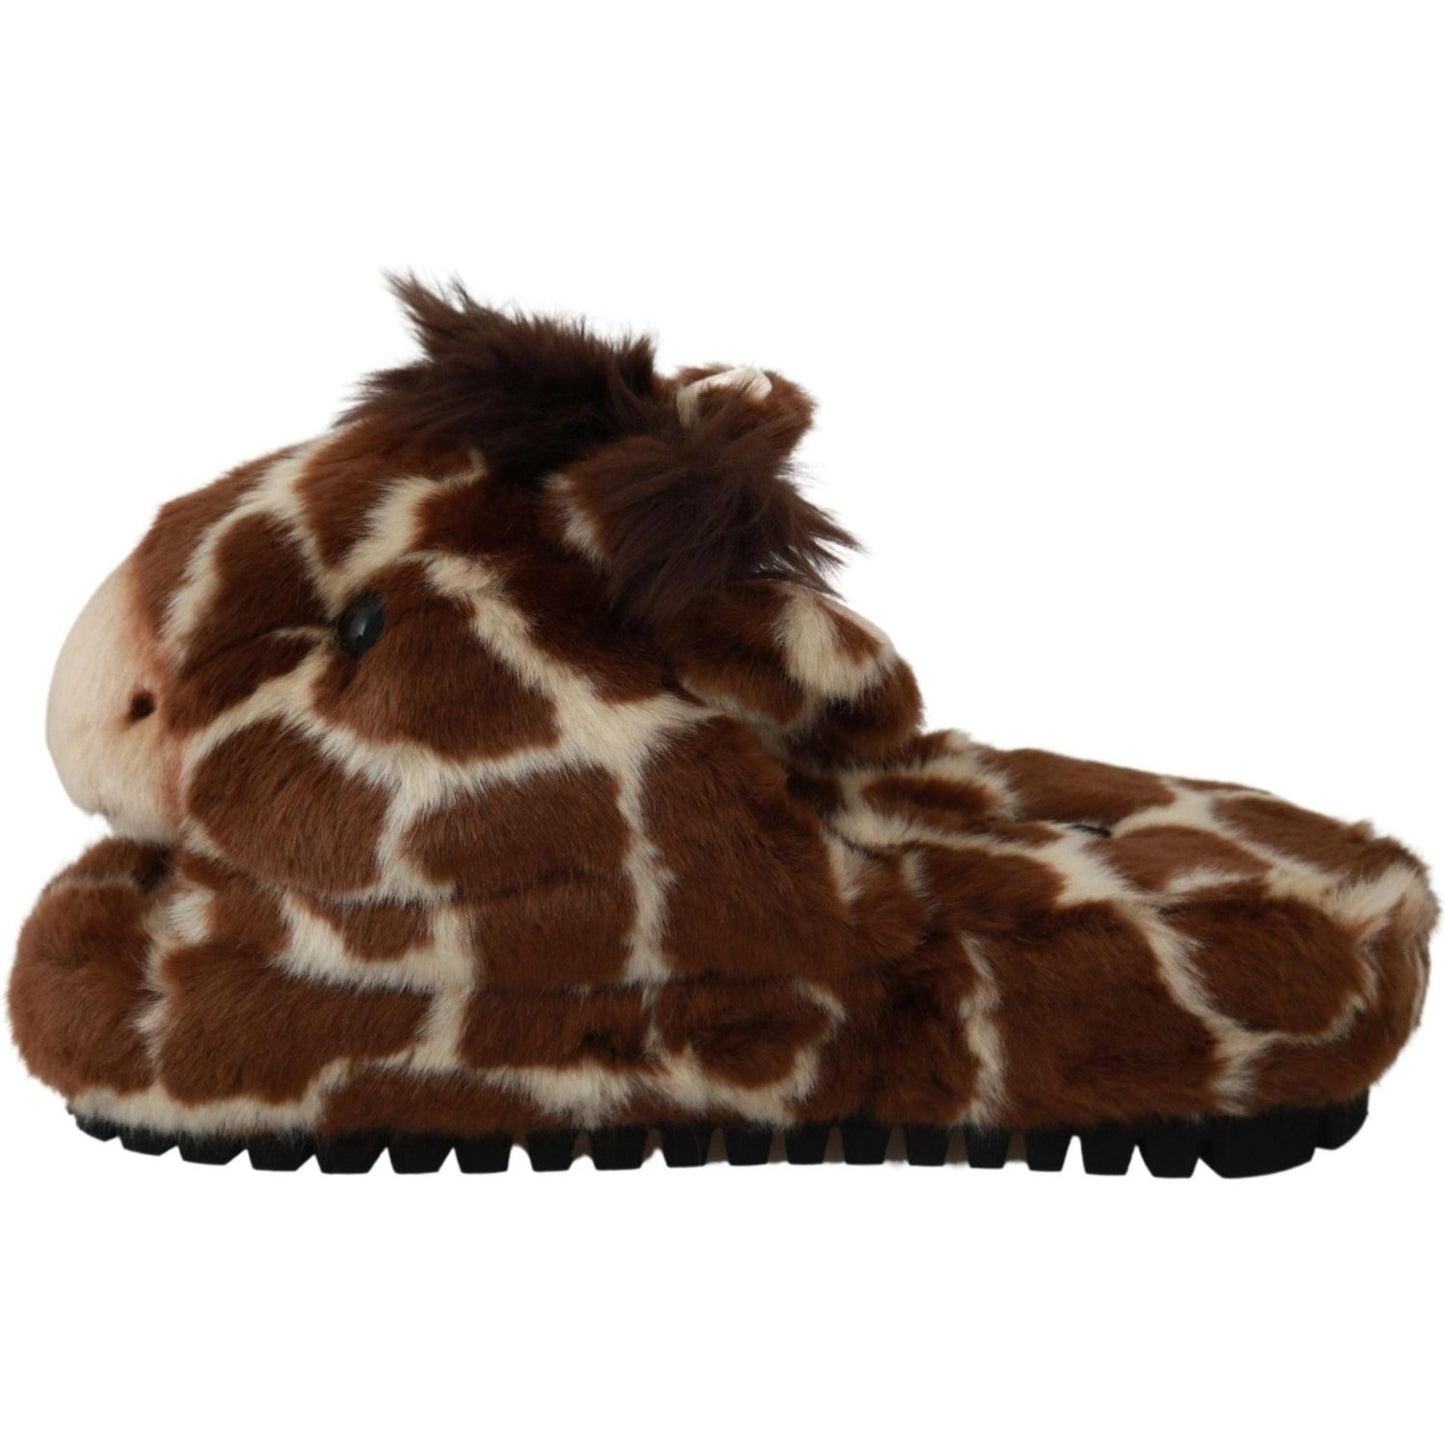 Dolce & Gabbana Elegant Giraffe Pattern Slides for Sophisticated Comfort brown-giraffe-slippers-flats-sandals-shoes IMG_1584-scaled-2da31cc1-14c.jpg